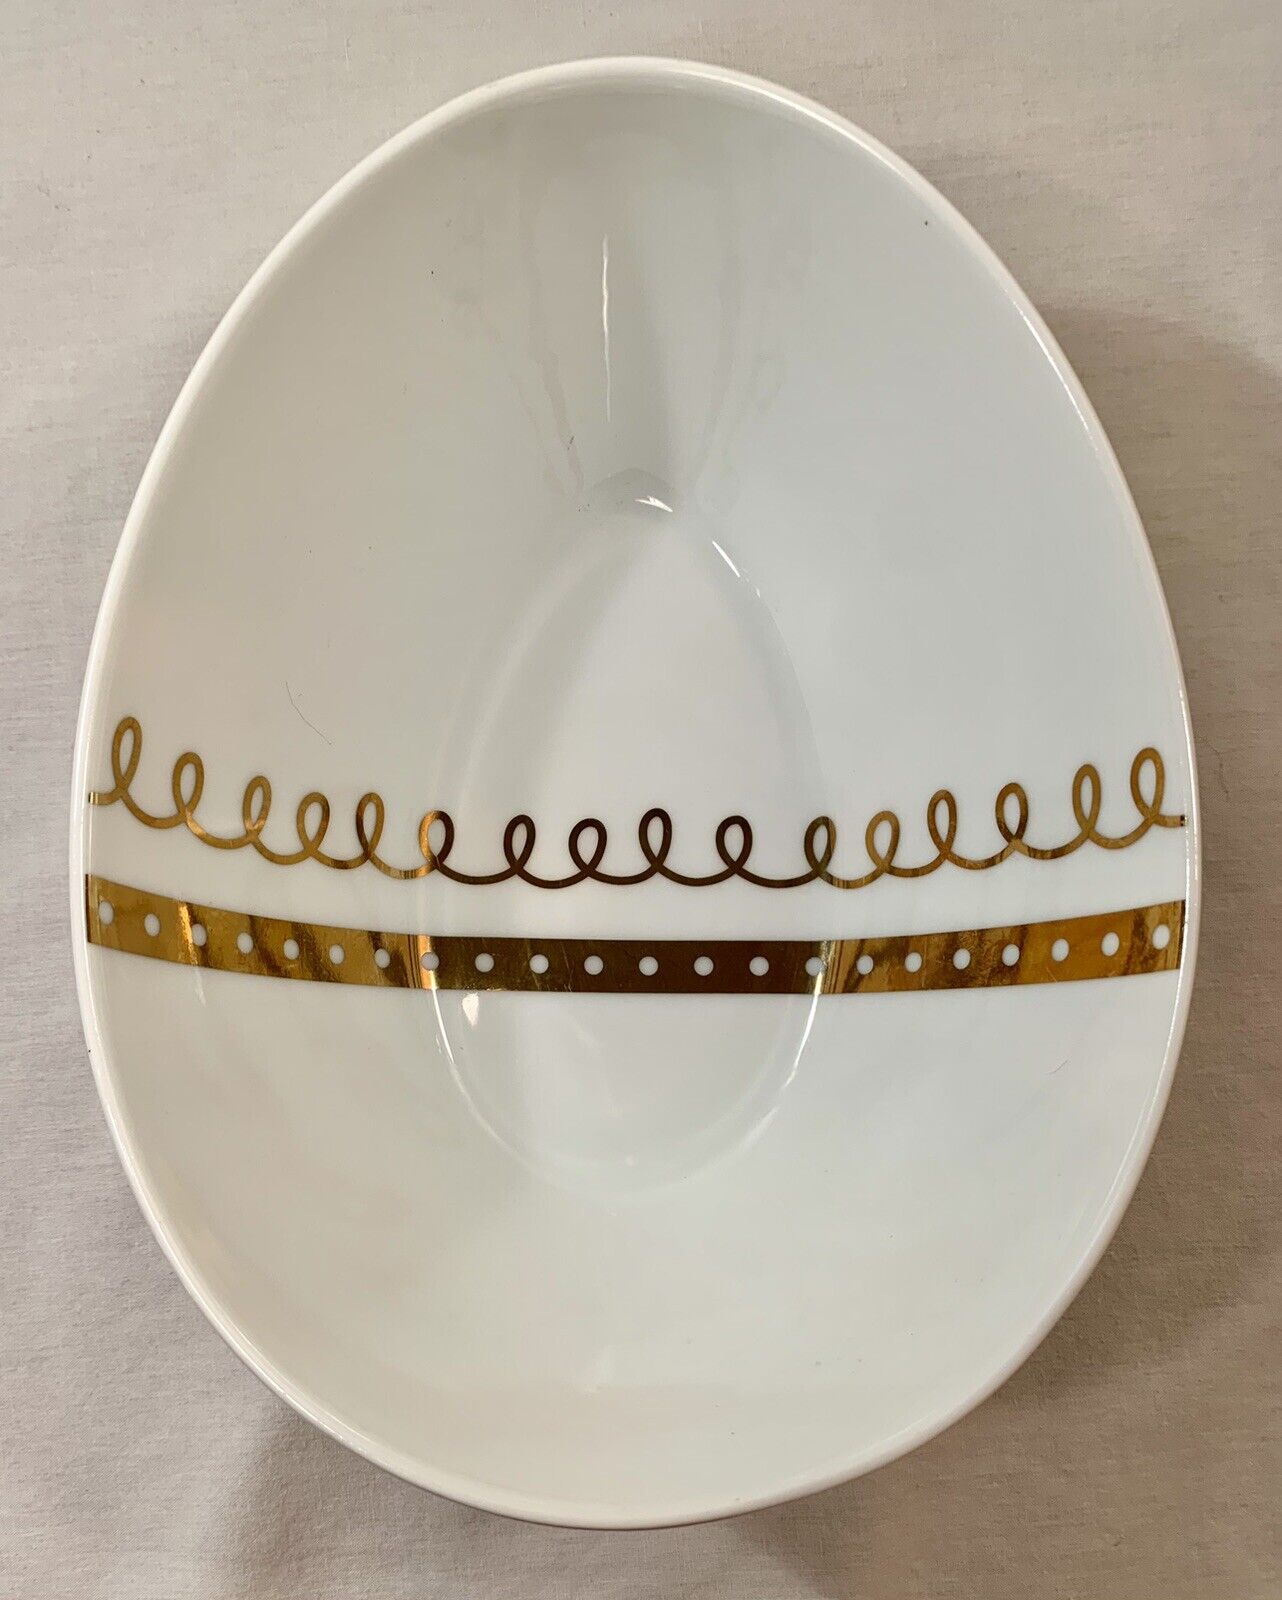 Target Threshold 2016 EASTER EGG Serving Dish / Bowl: White & Gold • Porcelain